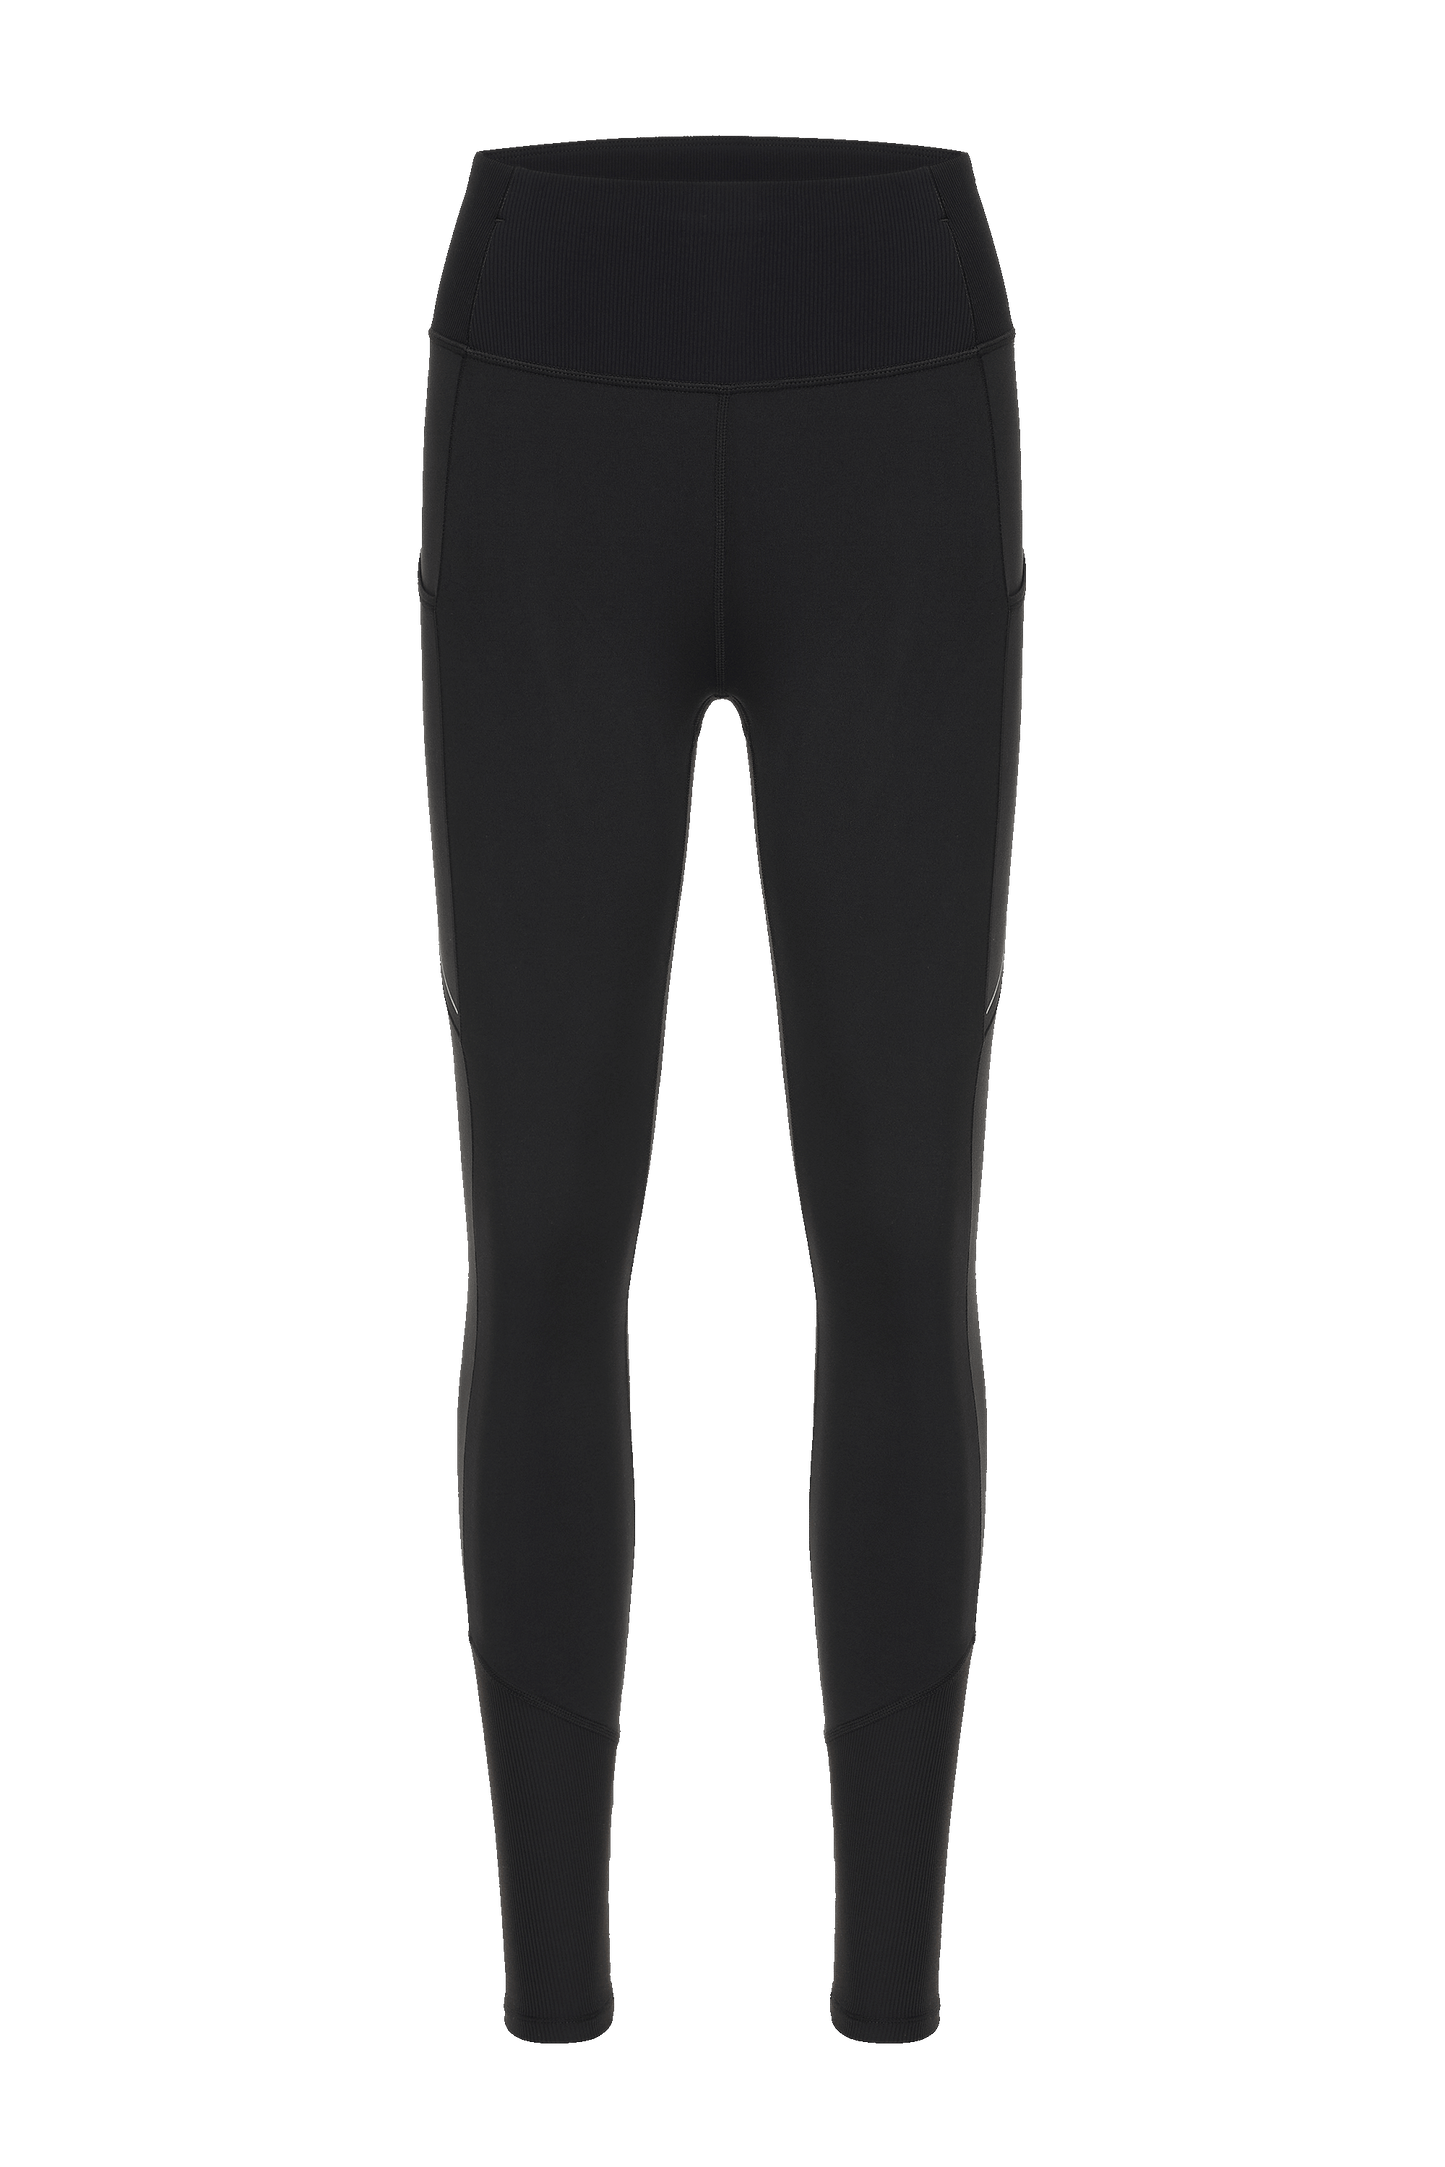 image of black leggings